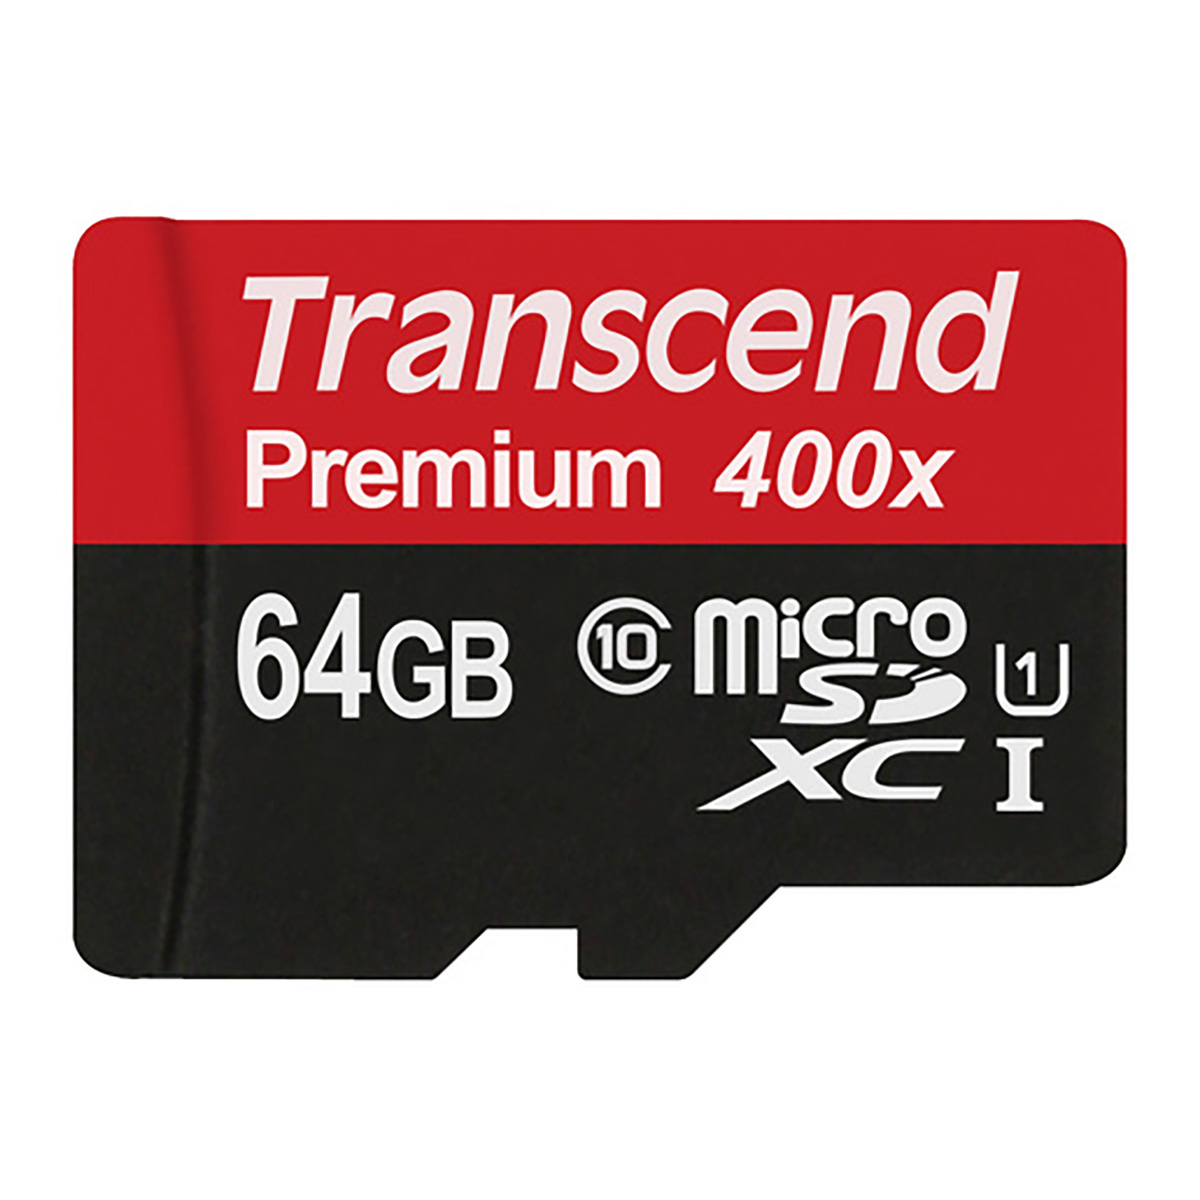 Transcend 64GB microSDXC CL10 UHS-1 400x